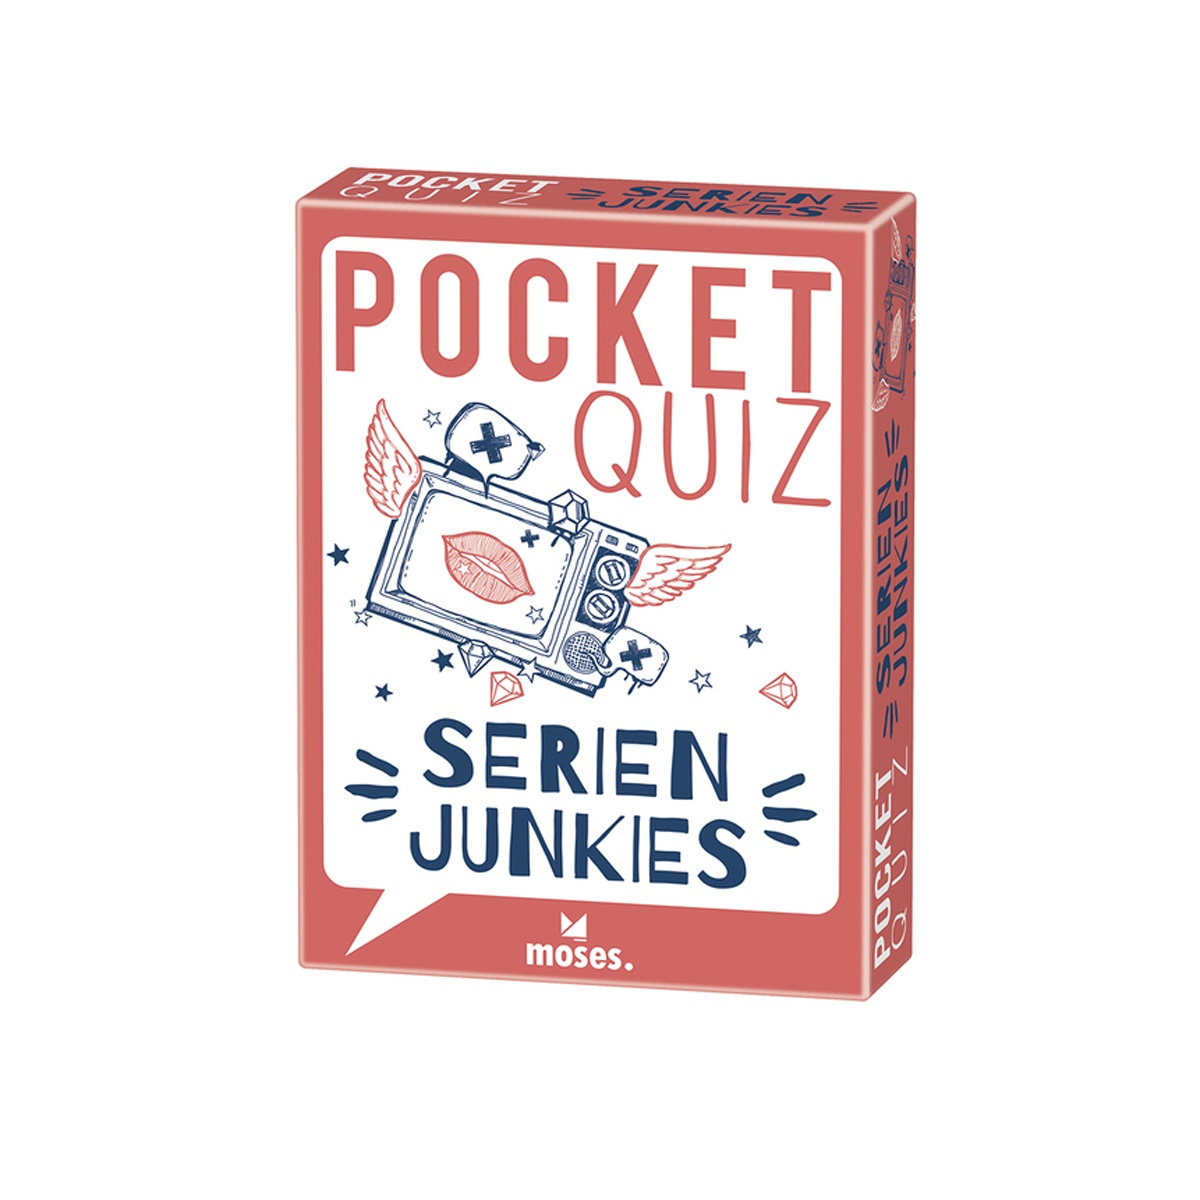 Pocket Quiz Serienjunkies von moses